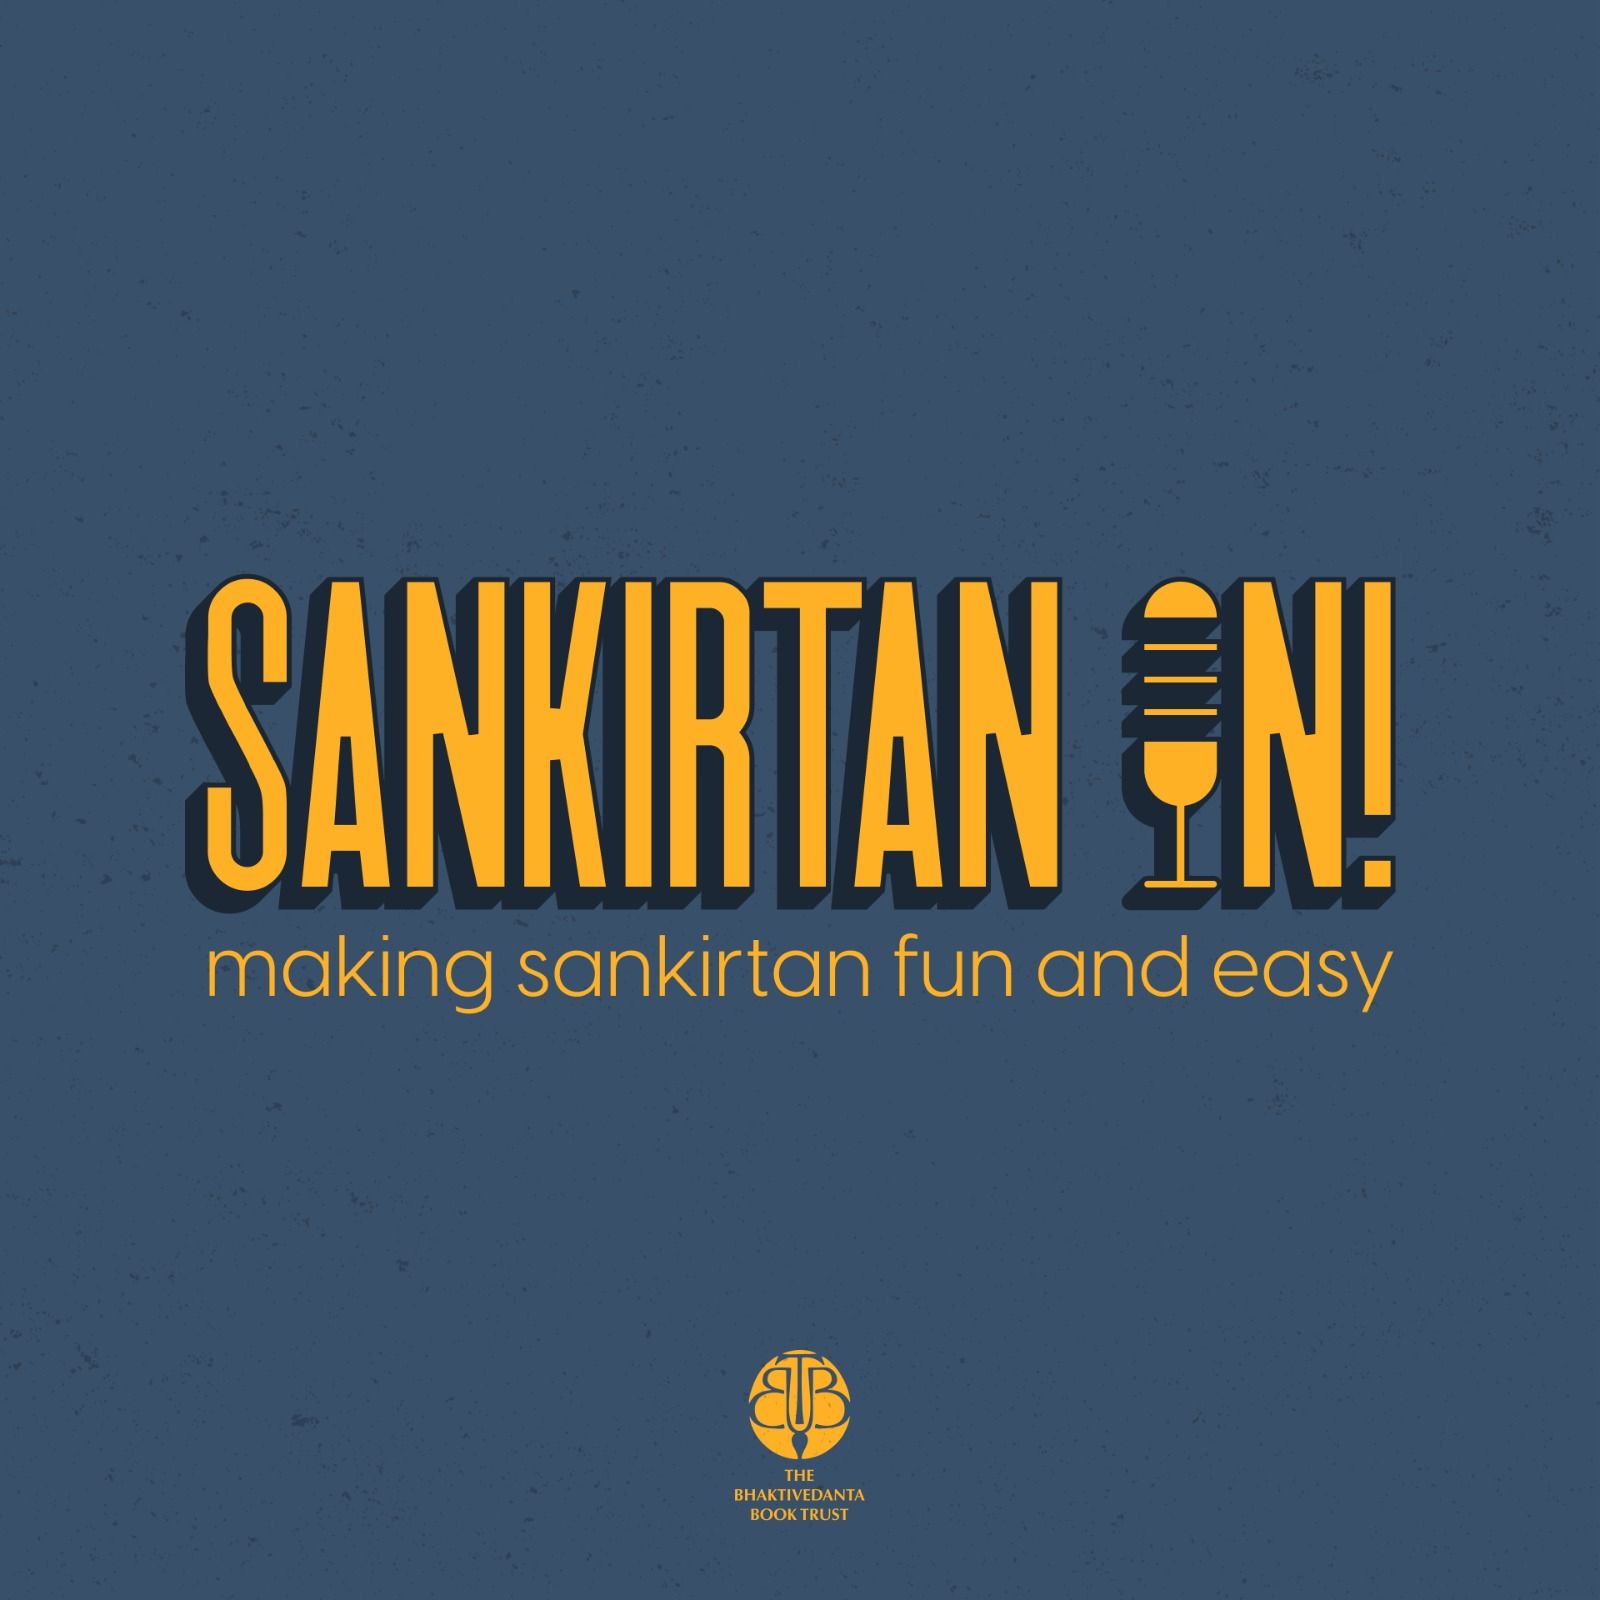 Sankirtan On! podcast show image